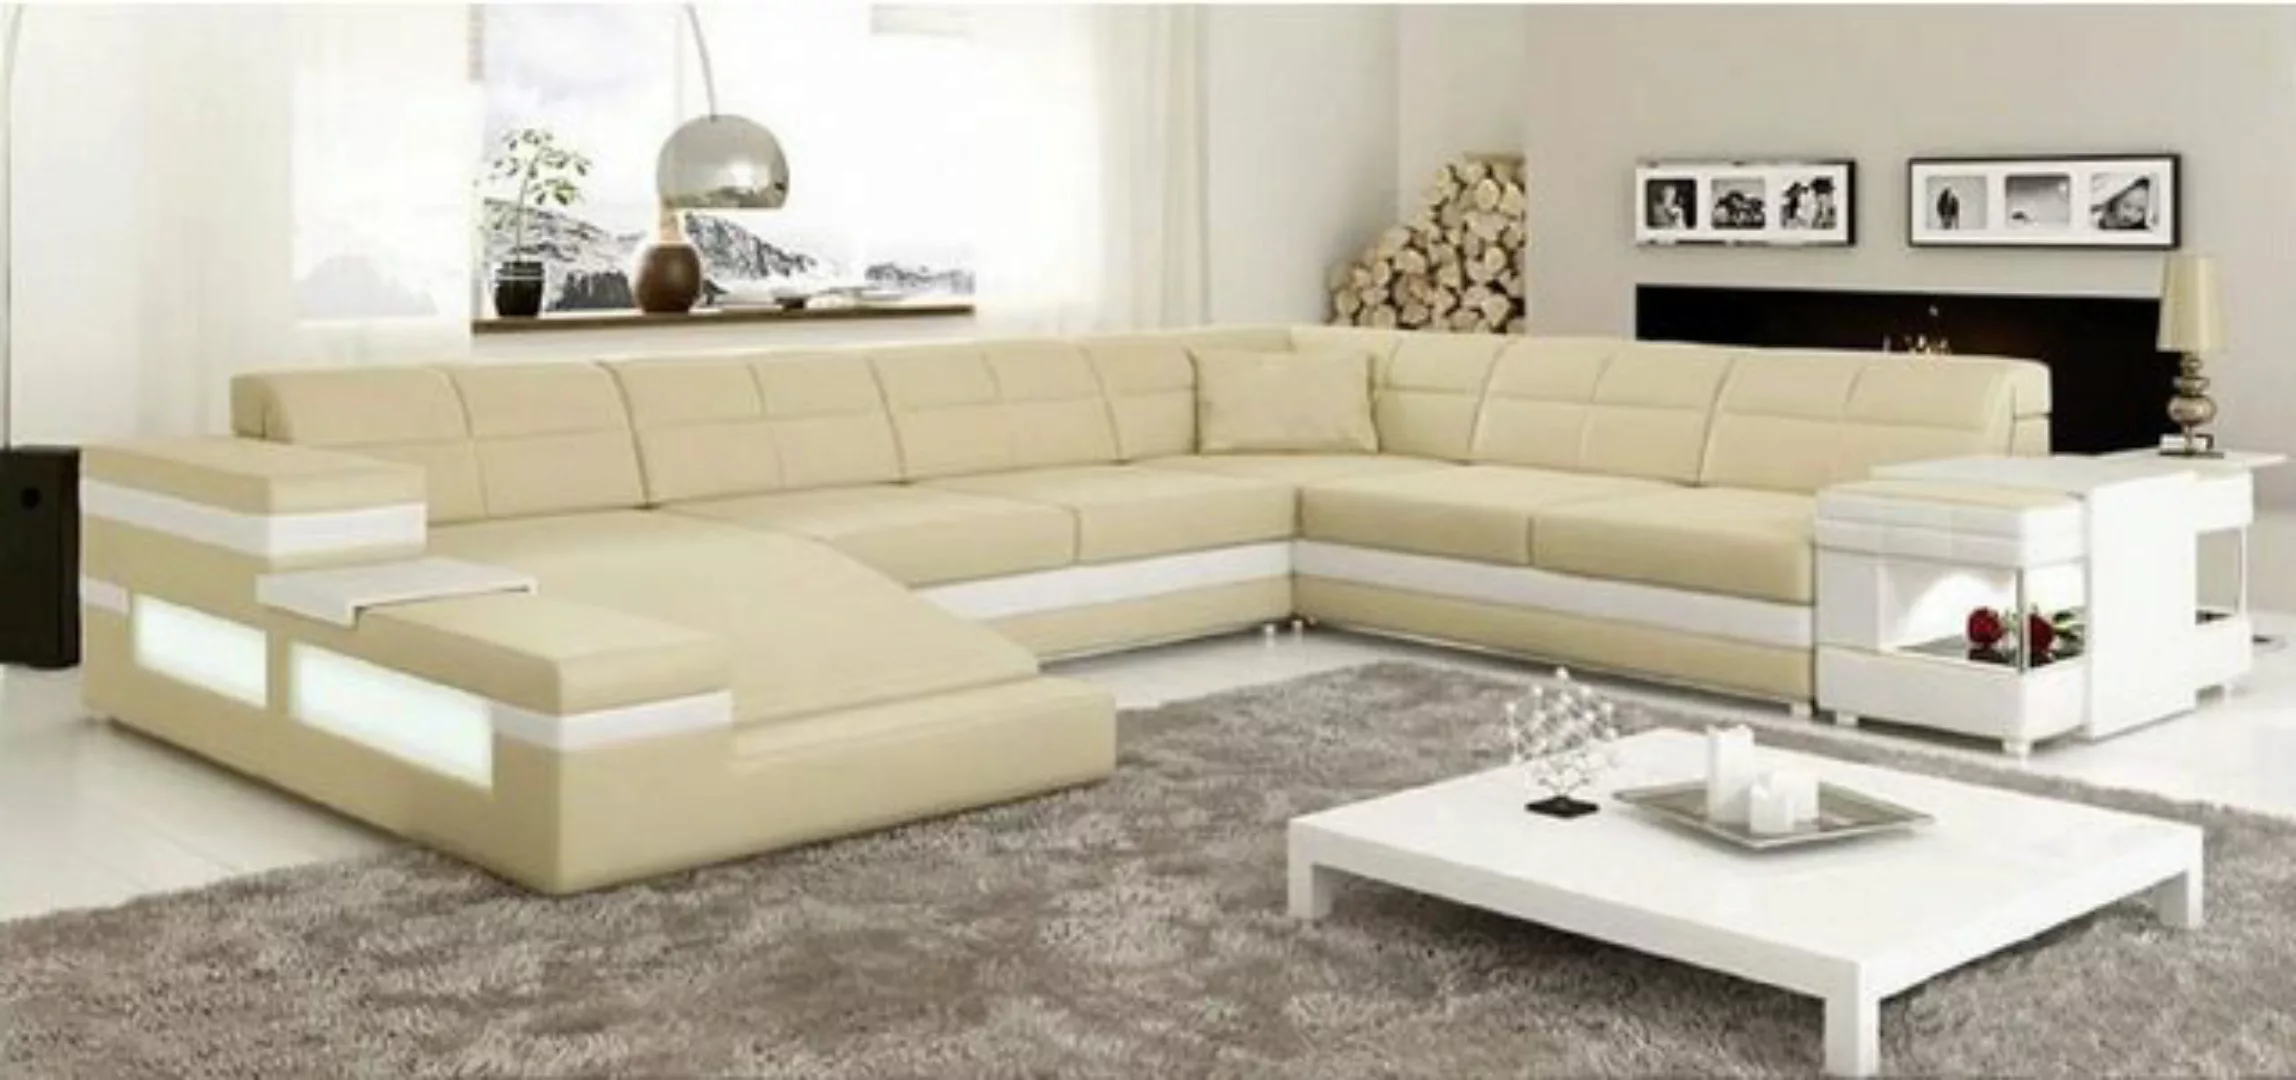 JVmoebel Ecksofa Design Ecksofa Sofa Couch Polster Eckgarnitur Ledersofa So günstig online kaufen